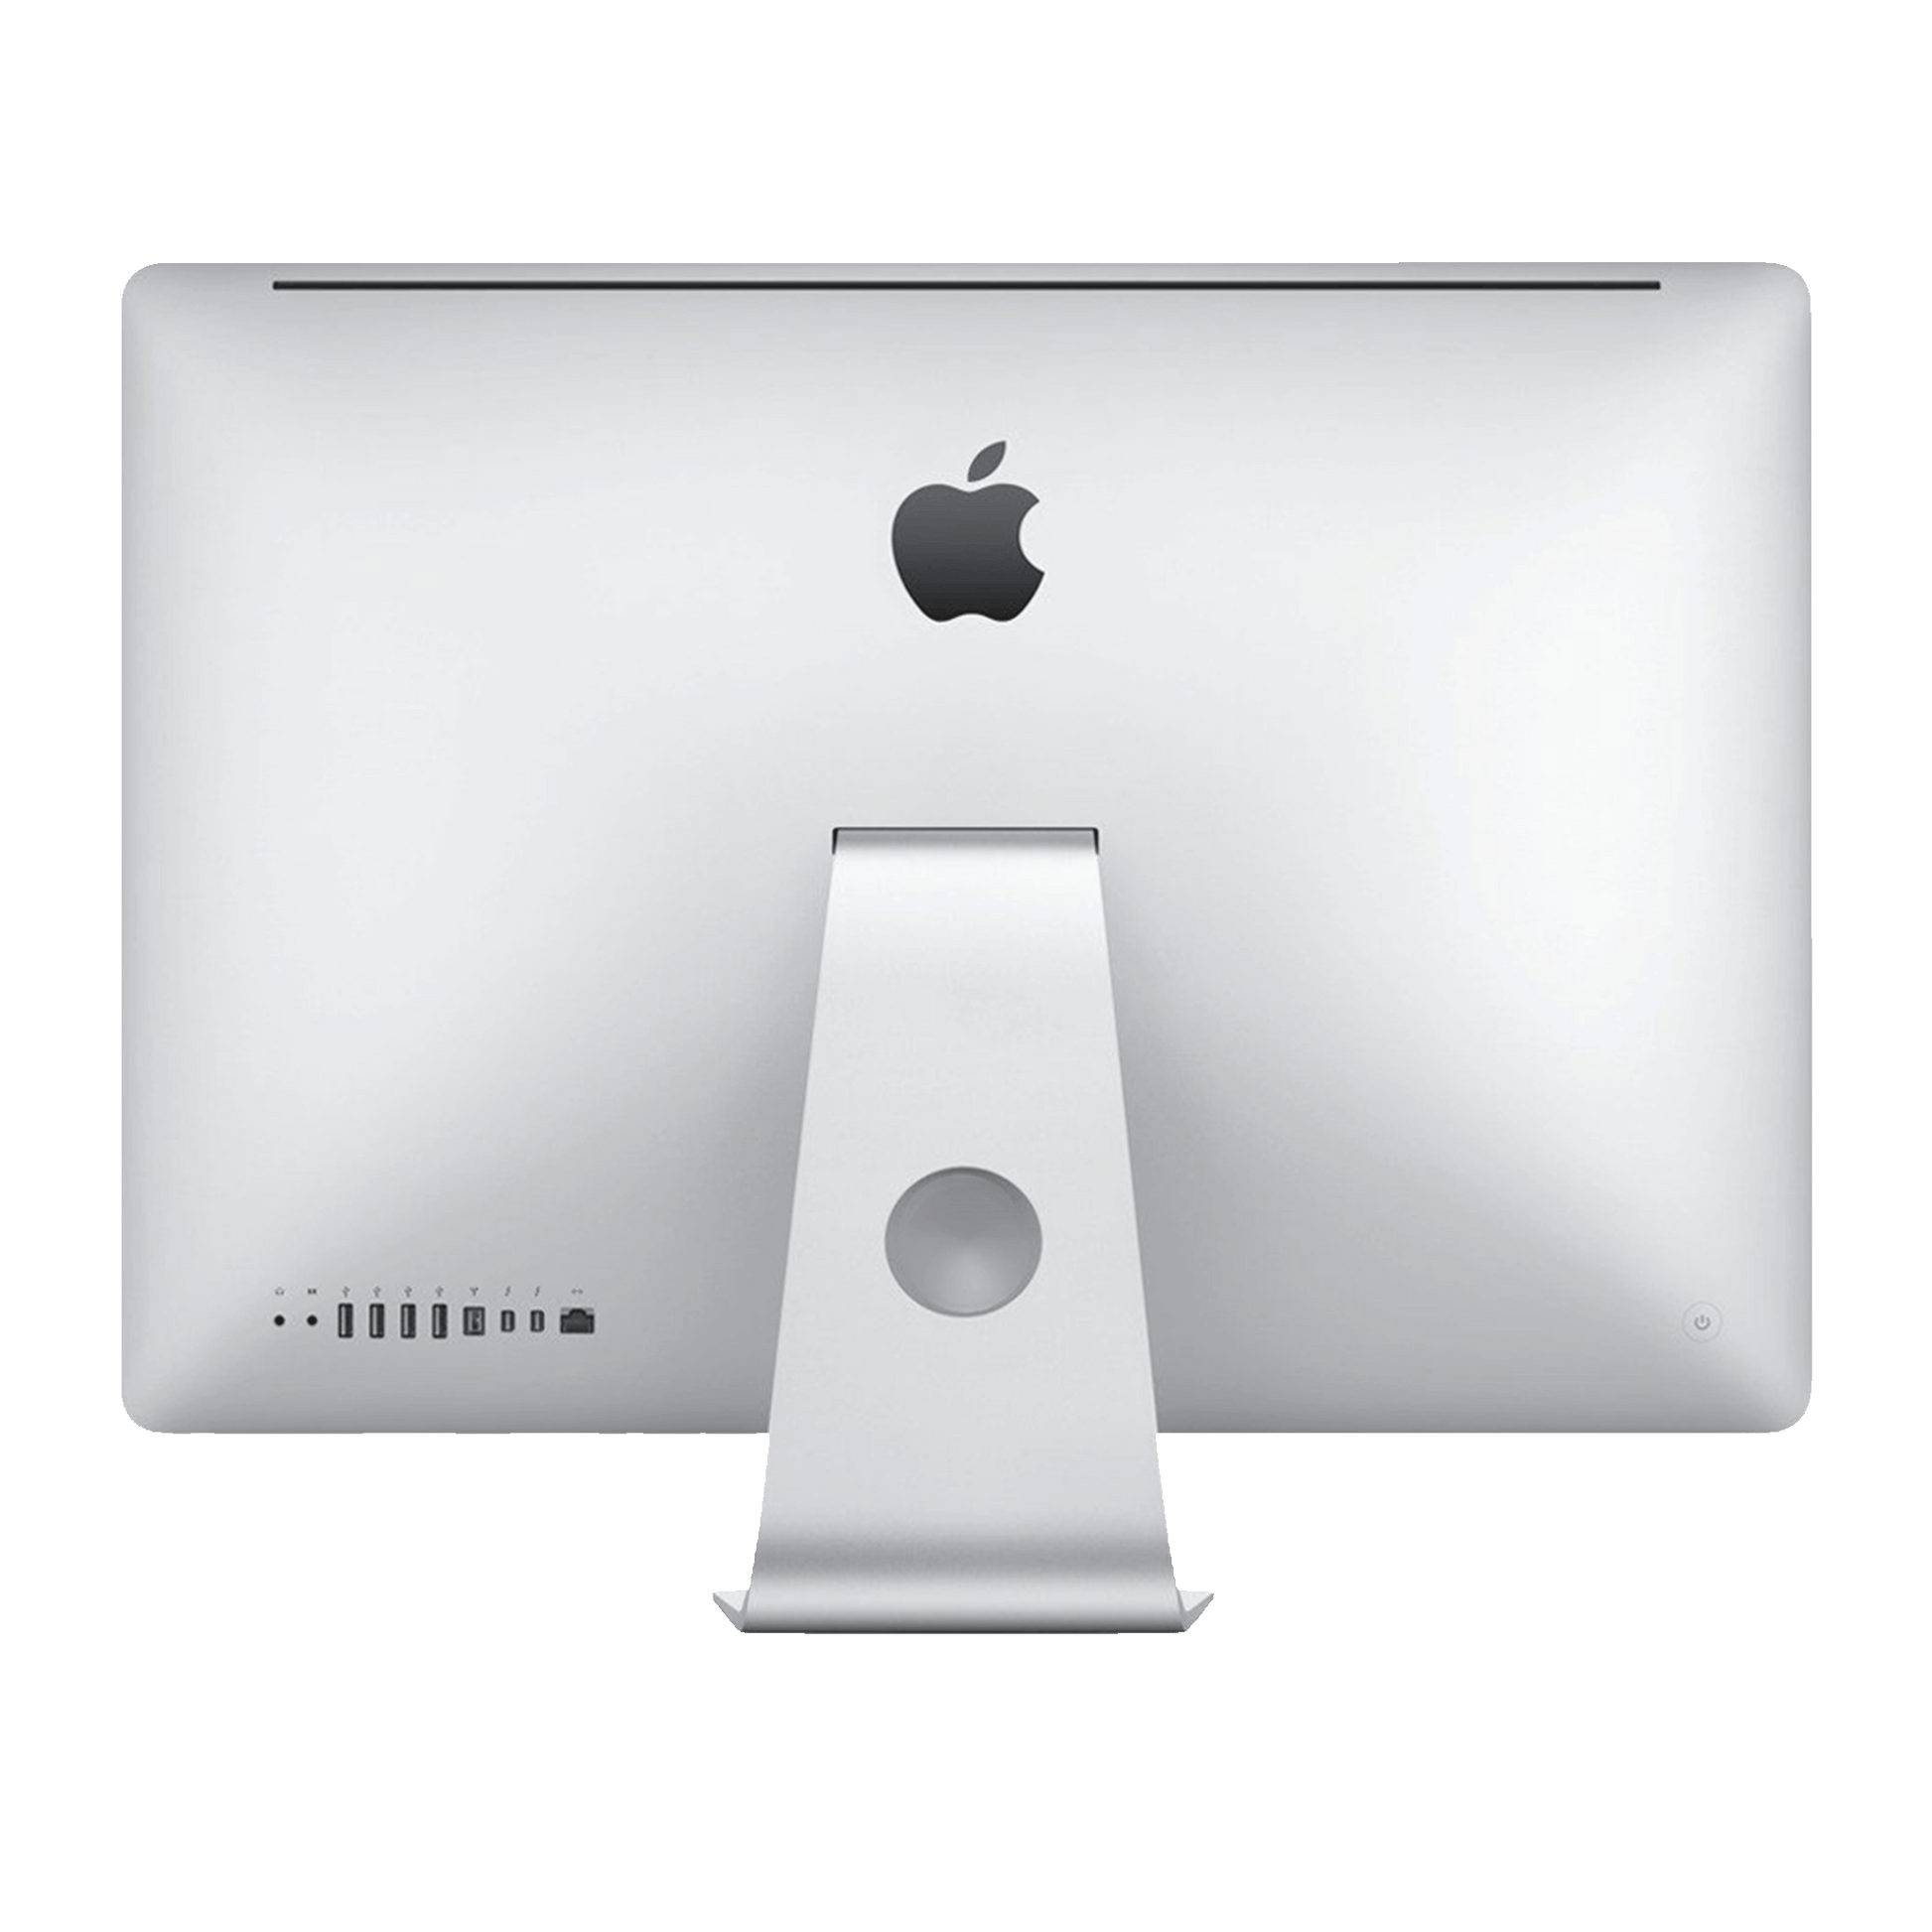 Refurbished iMac 27" i5 3.4 32gb 1tb fusion